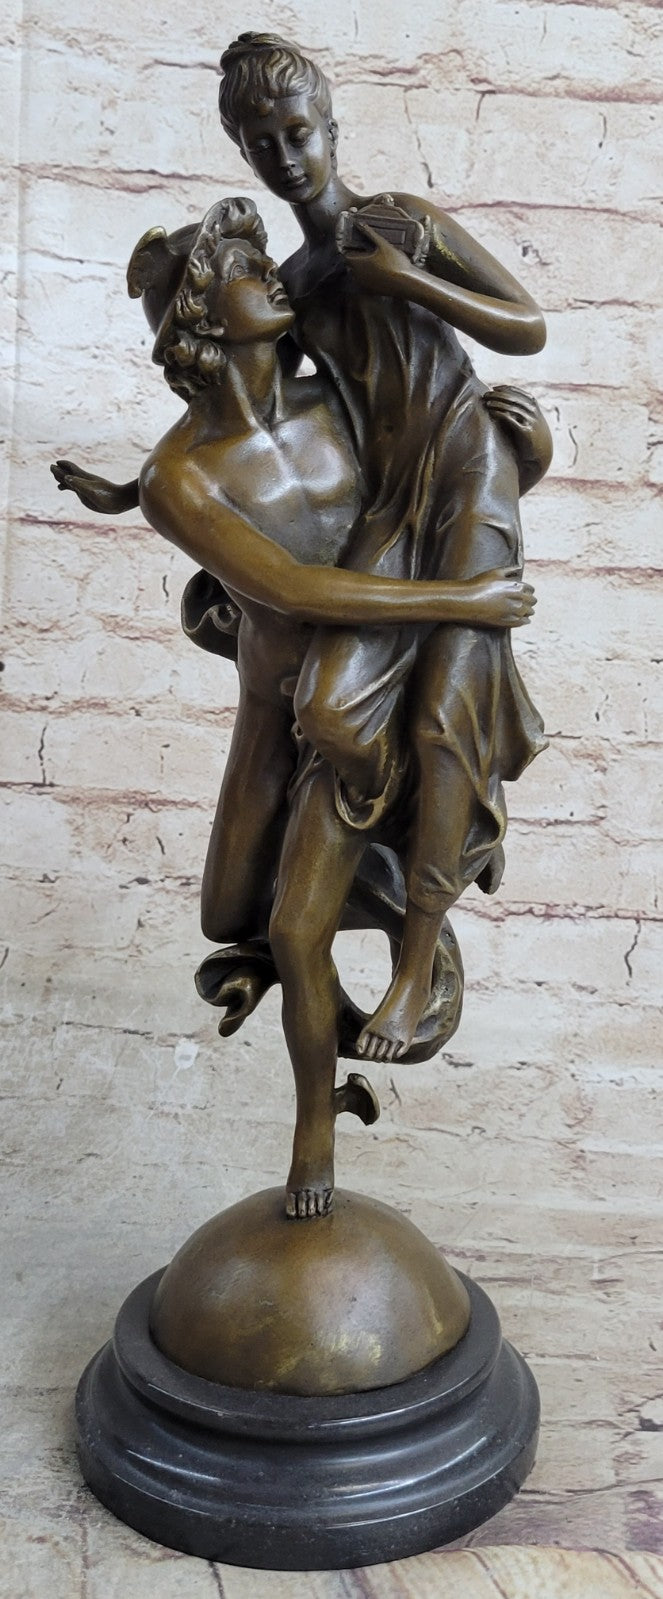 Handcrafted bronze sculpture SALE Pandor And Mercury Flying Hermes Of Rendition